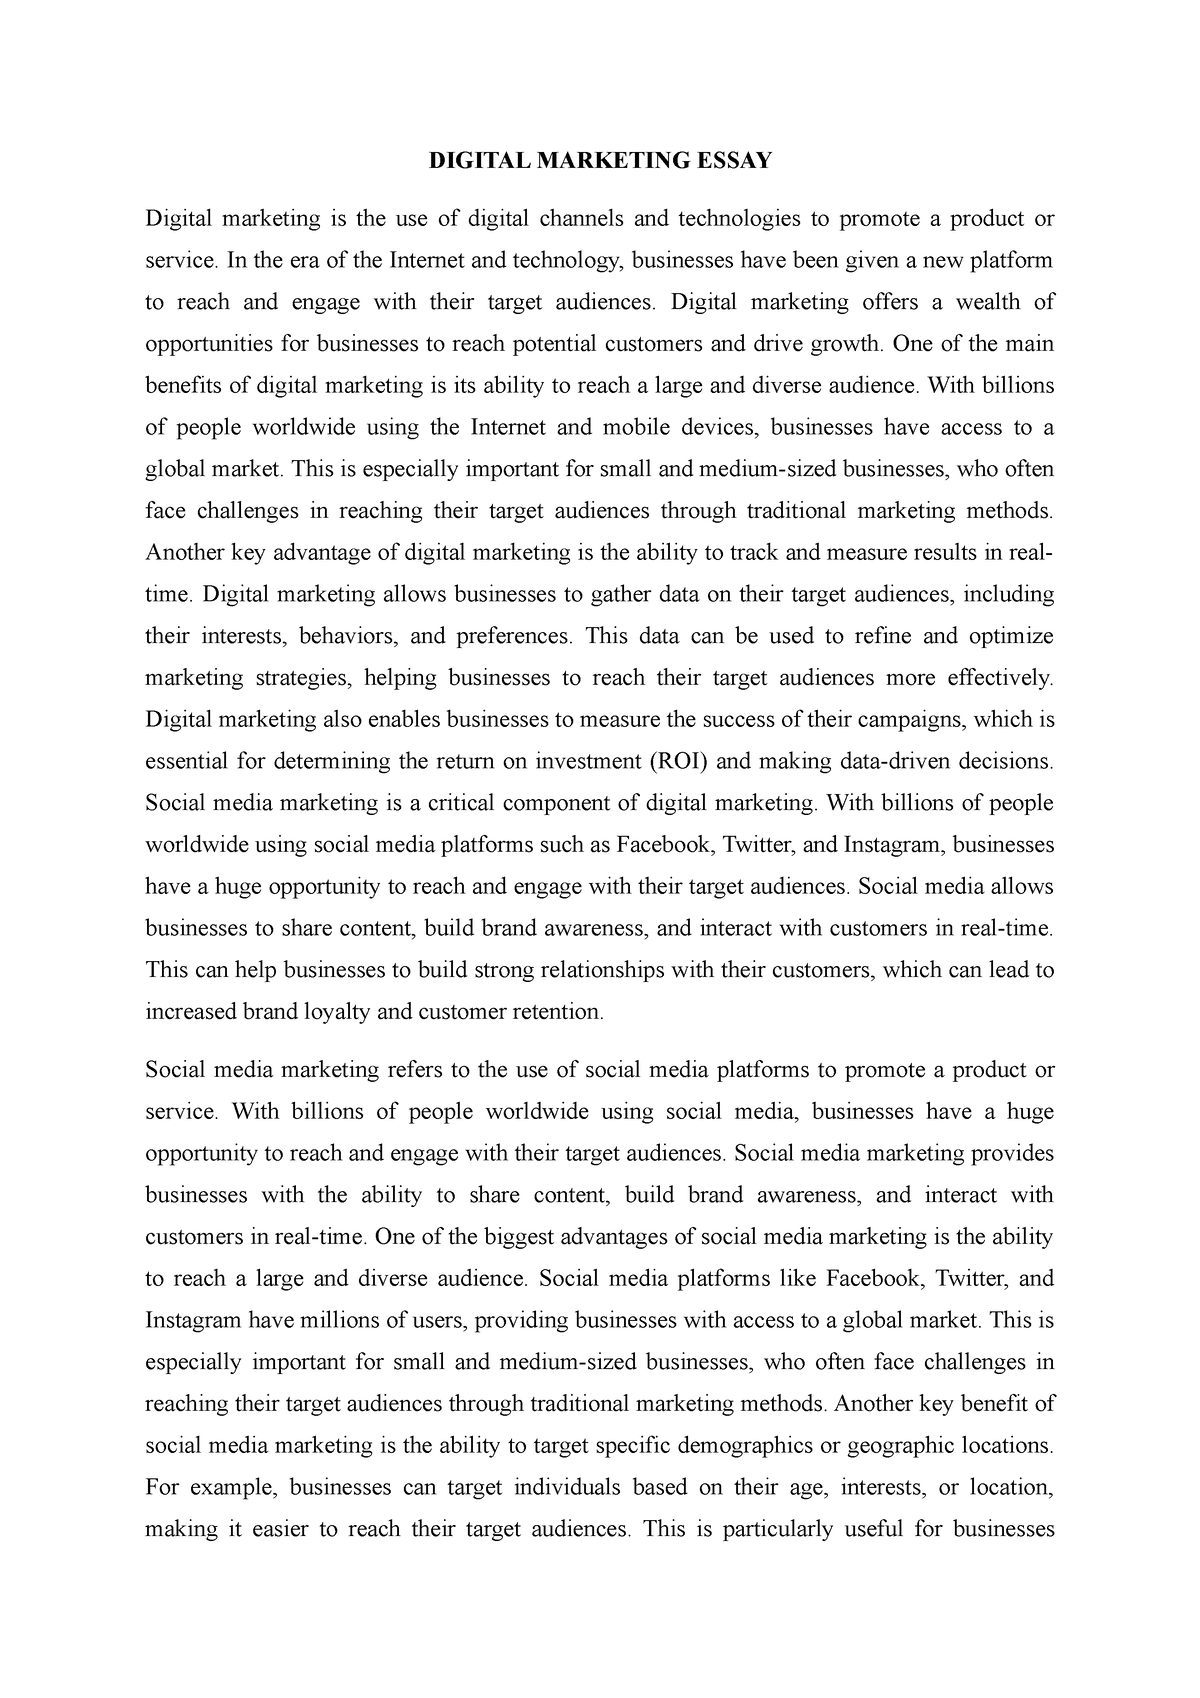 essay on network marketing pdf